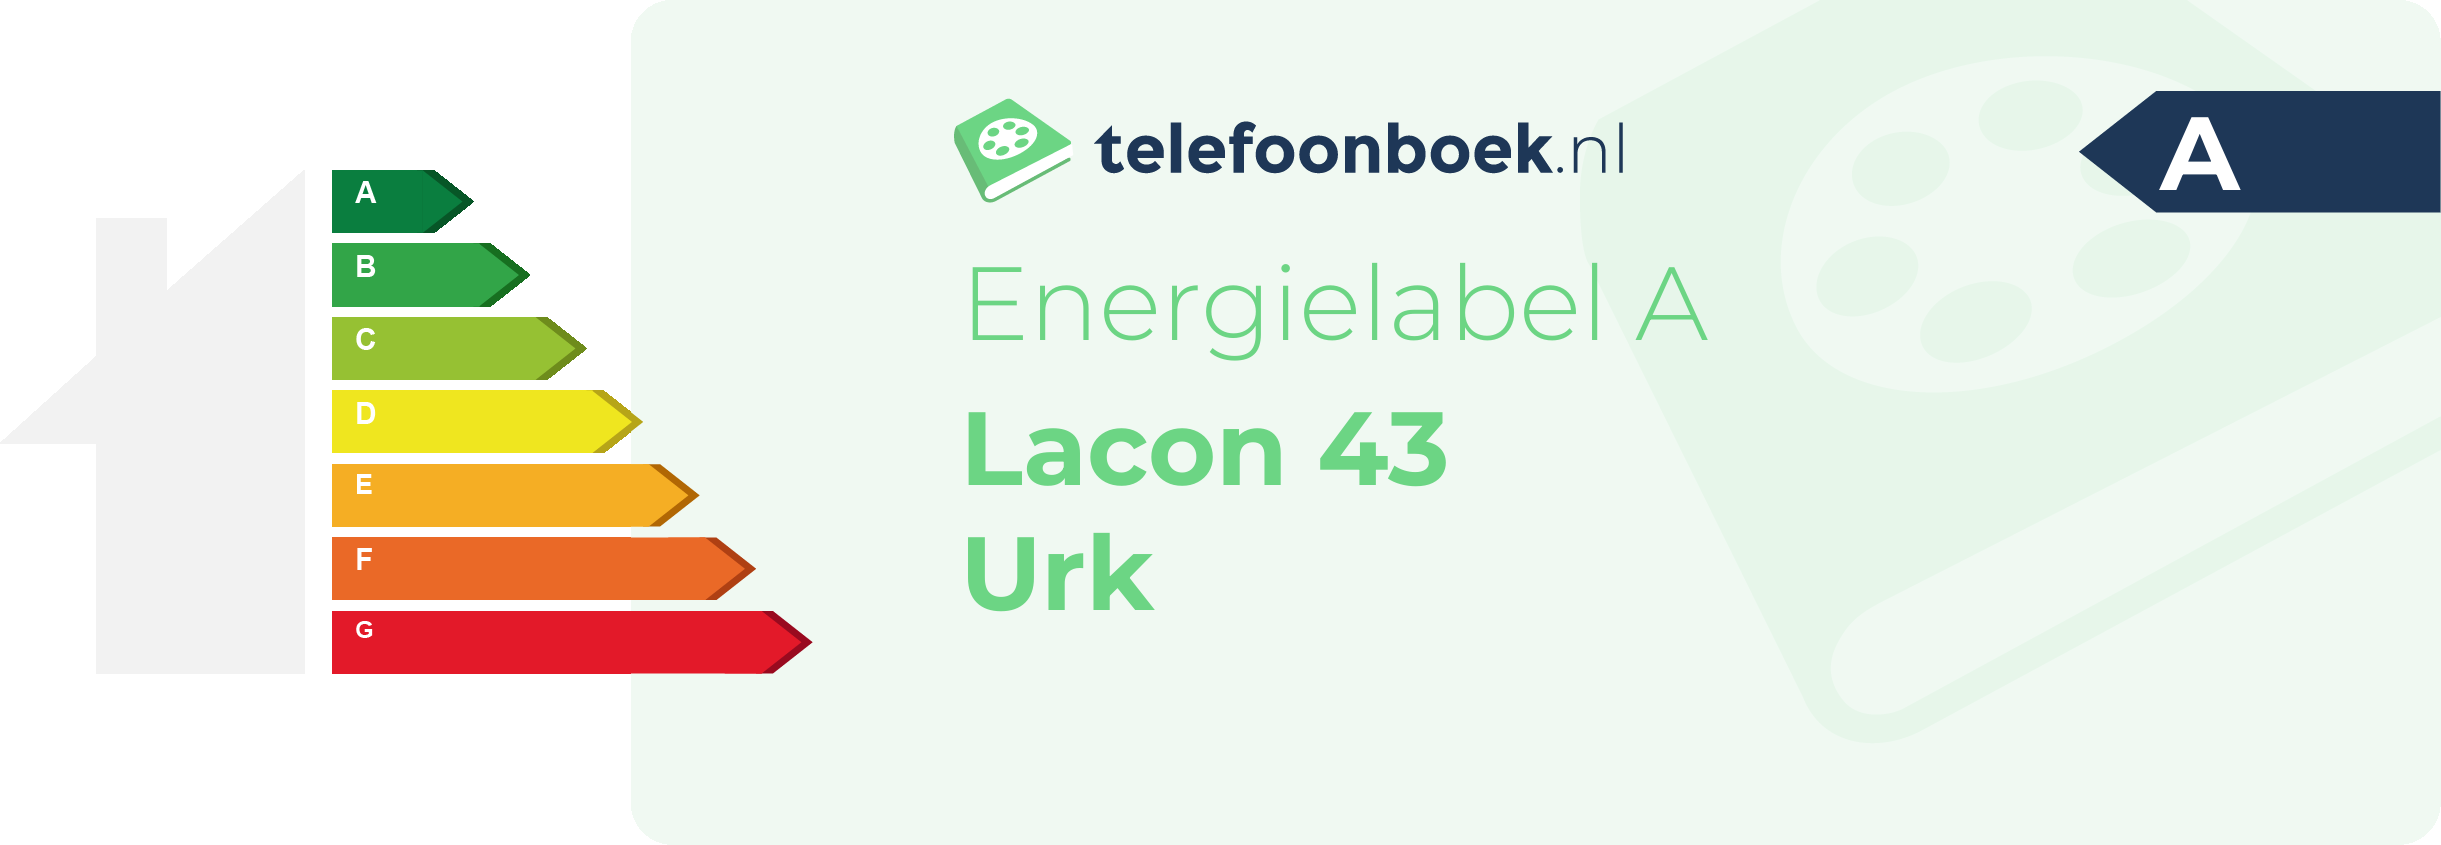 Energielabel Lacon 43 Urk